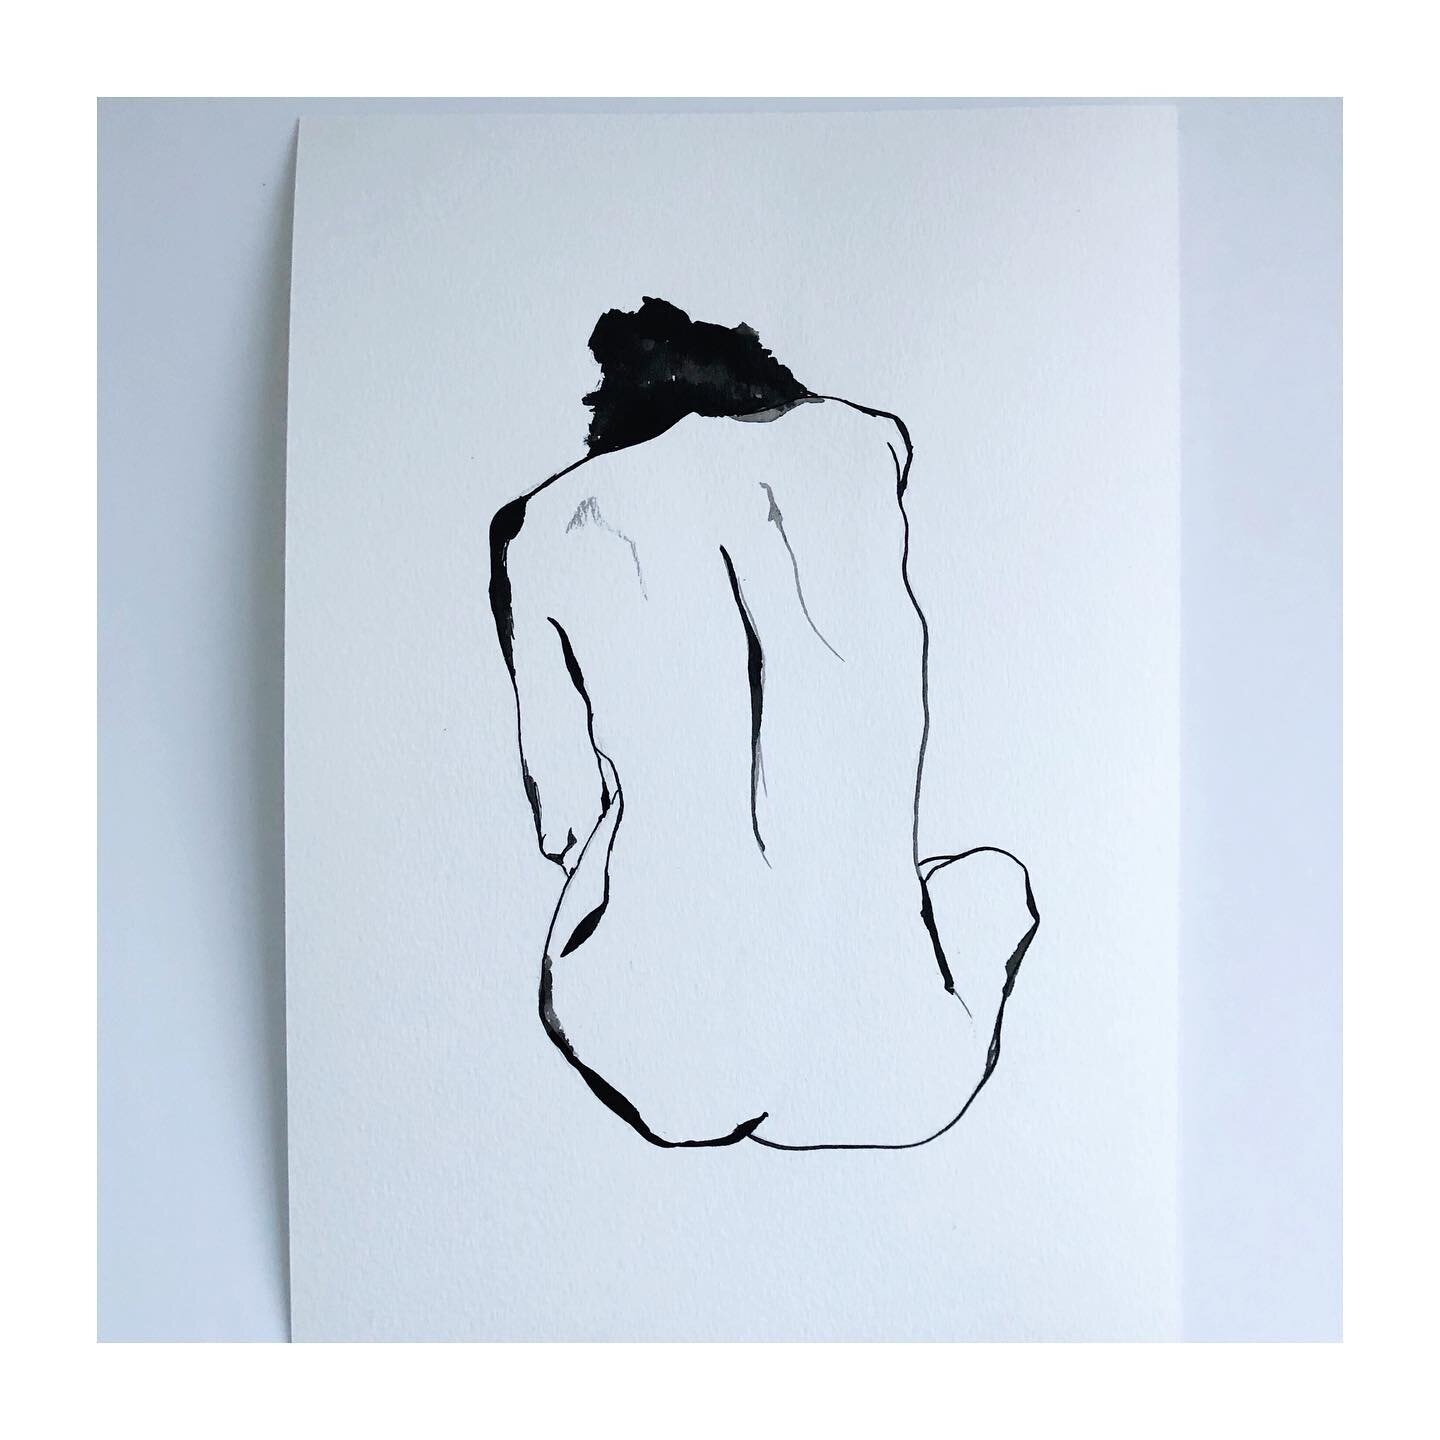 Figurative sketching

#artforyourhome #artforinteriors  #figurativeart #figurativepainting #lifedrawing #inkart #penandink #thehumanbody #femalenudes #arte #artistsofig